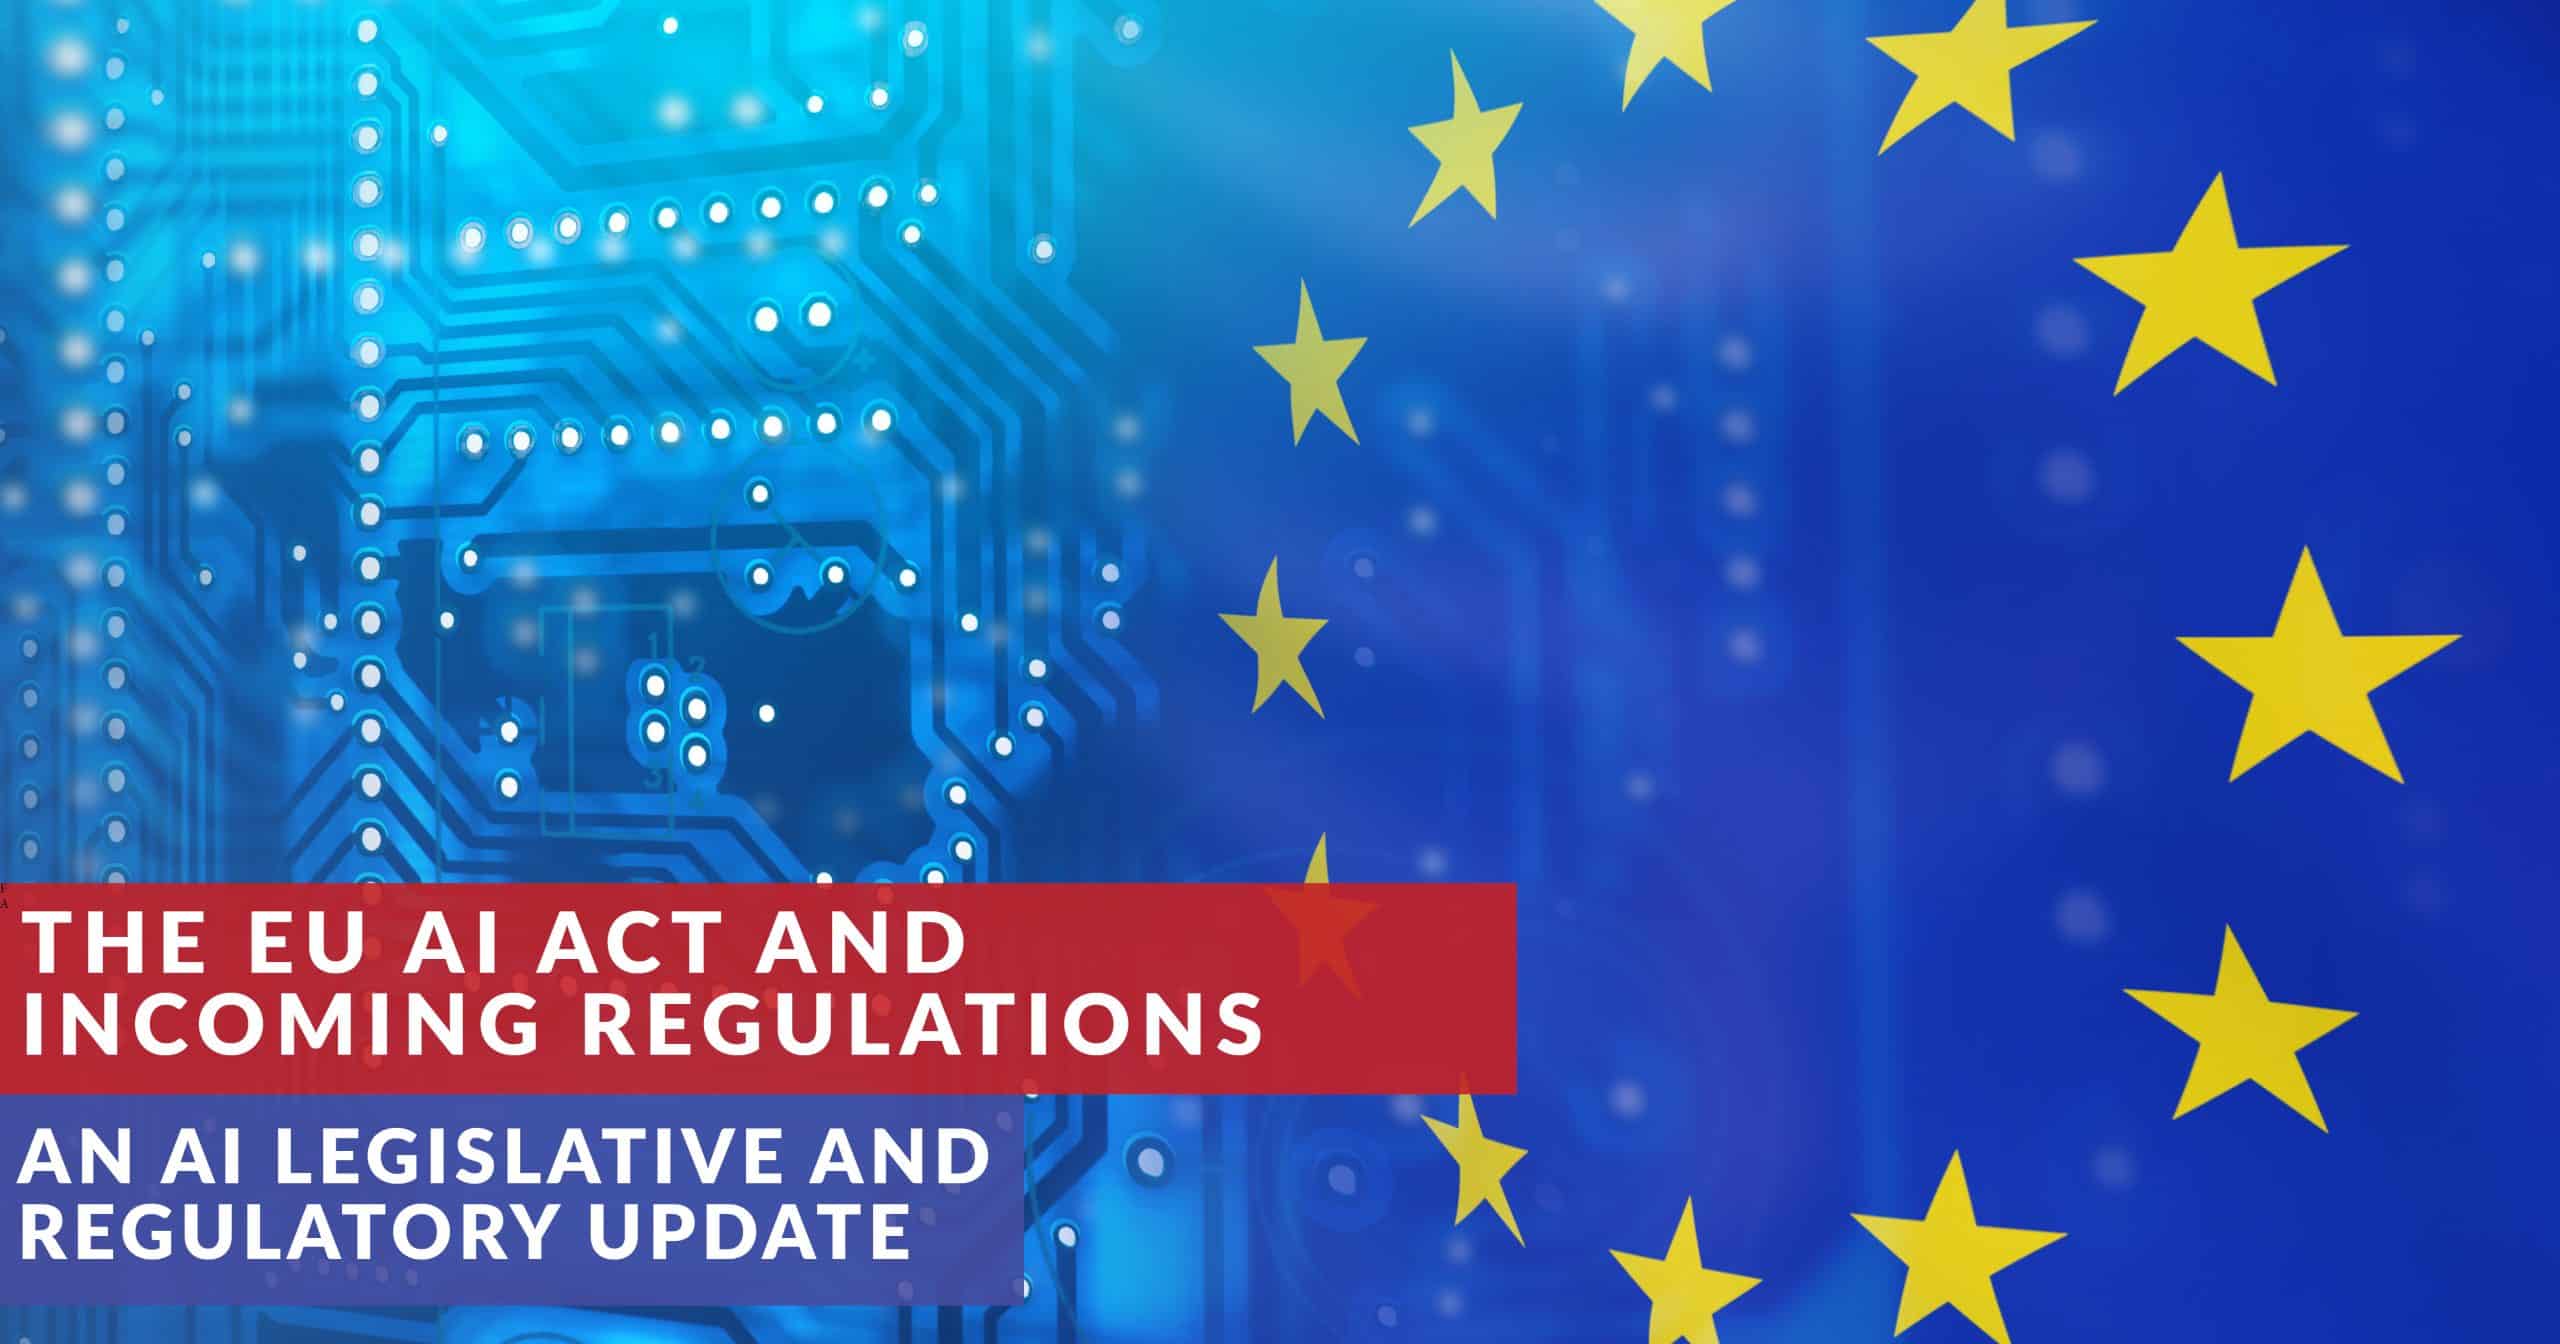 The EU AI Act: Incoming Regulations